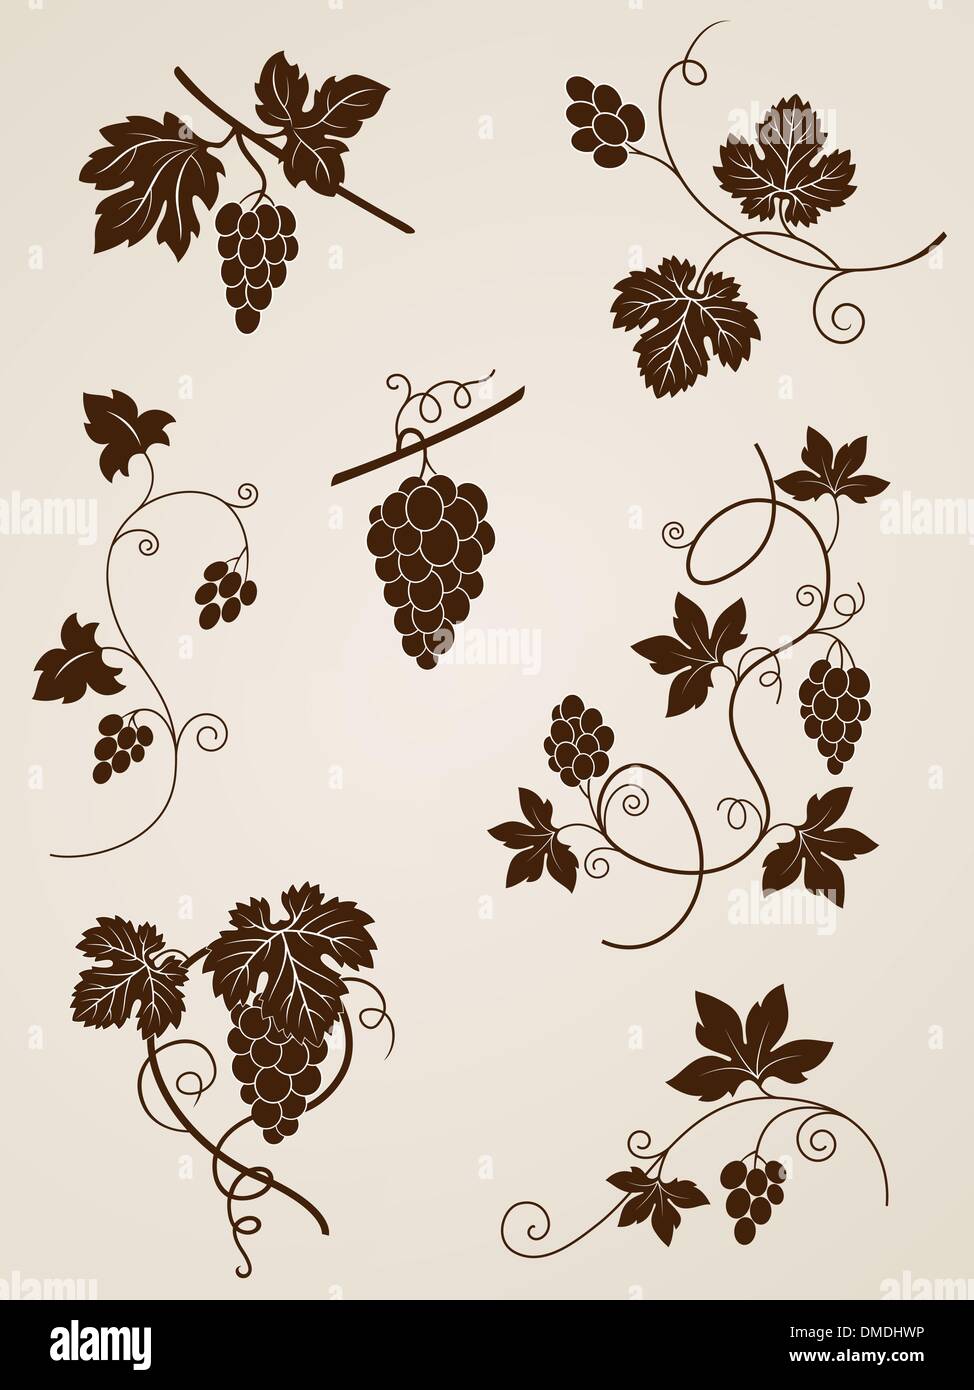 grape vine design elements Stock Vector